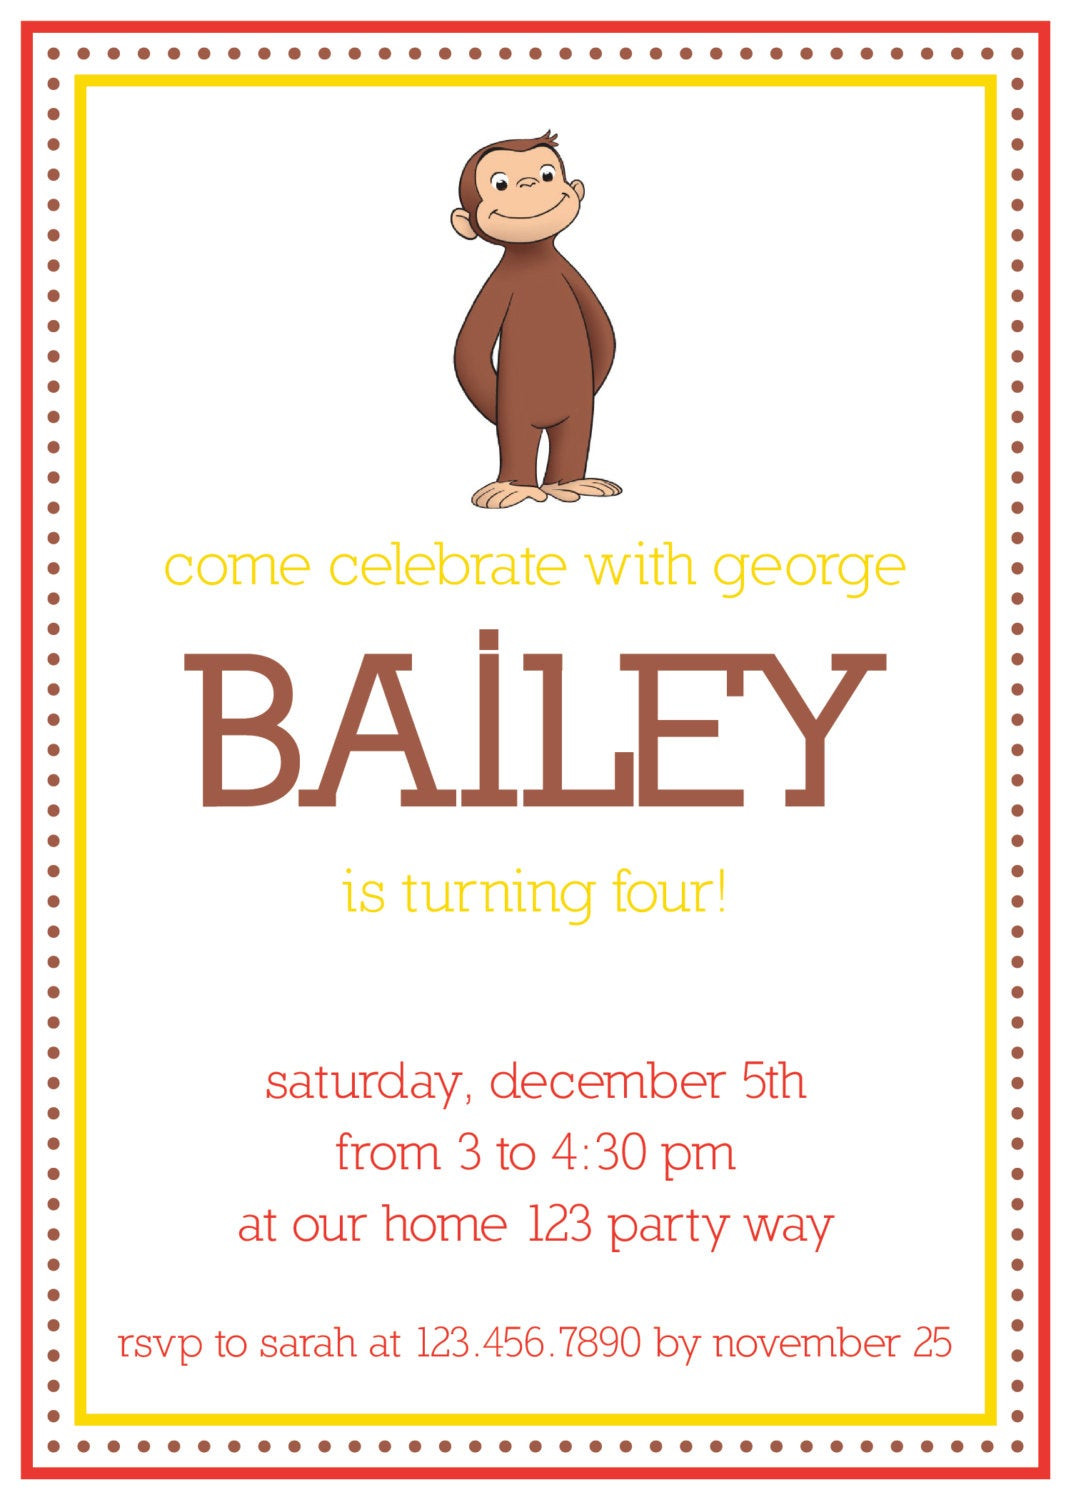 Curious George Birthday Invitation
 Items similar to Curious George birthday invitation on Etsy